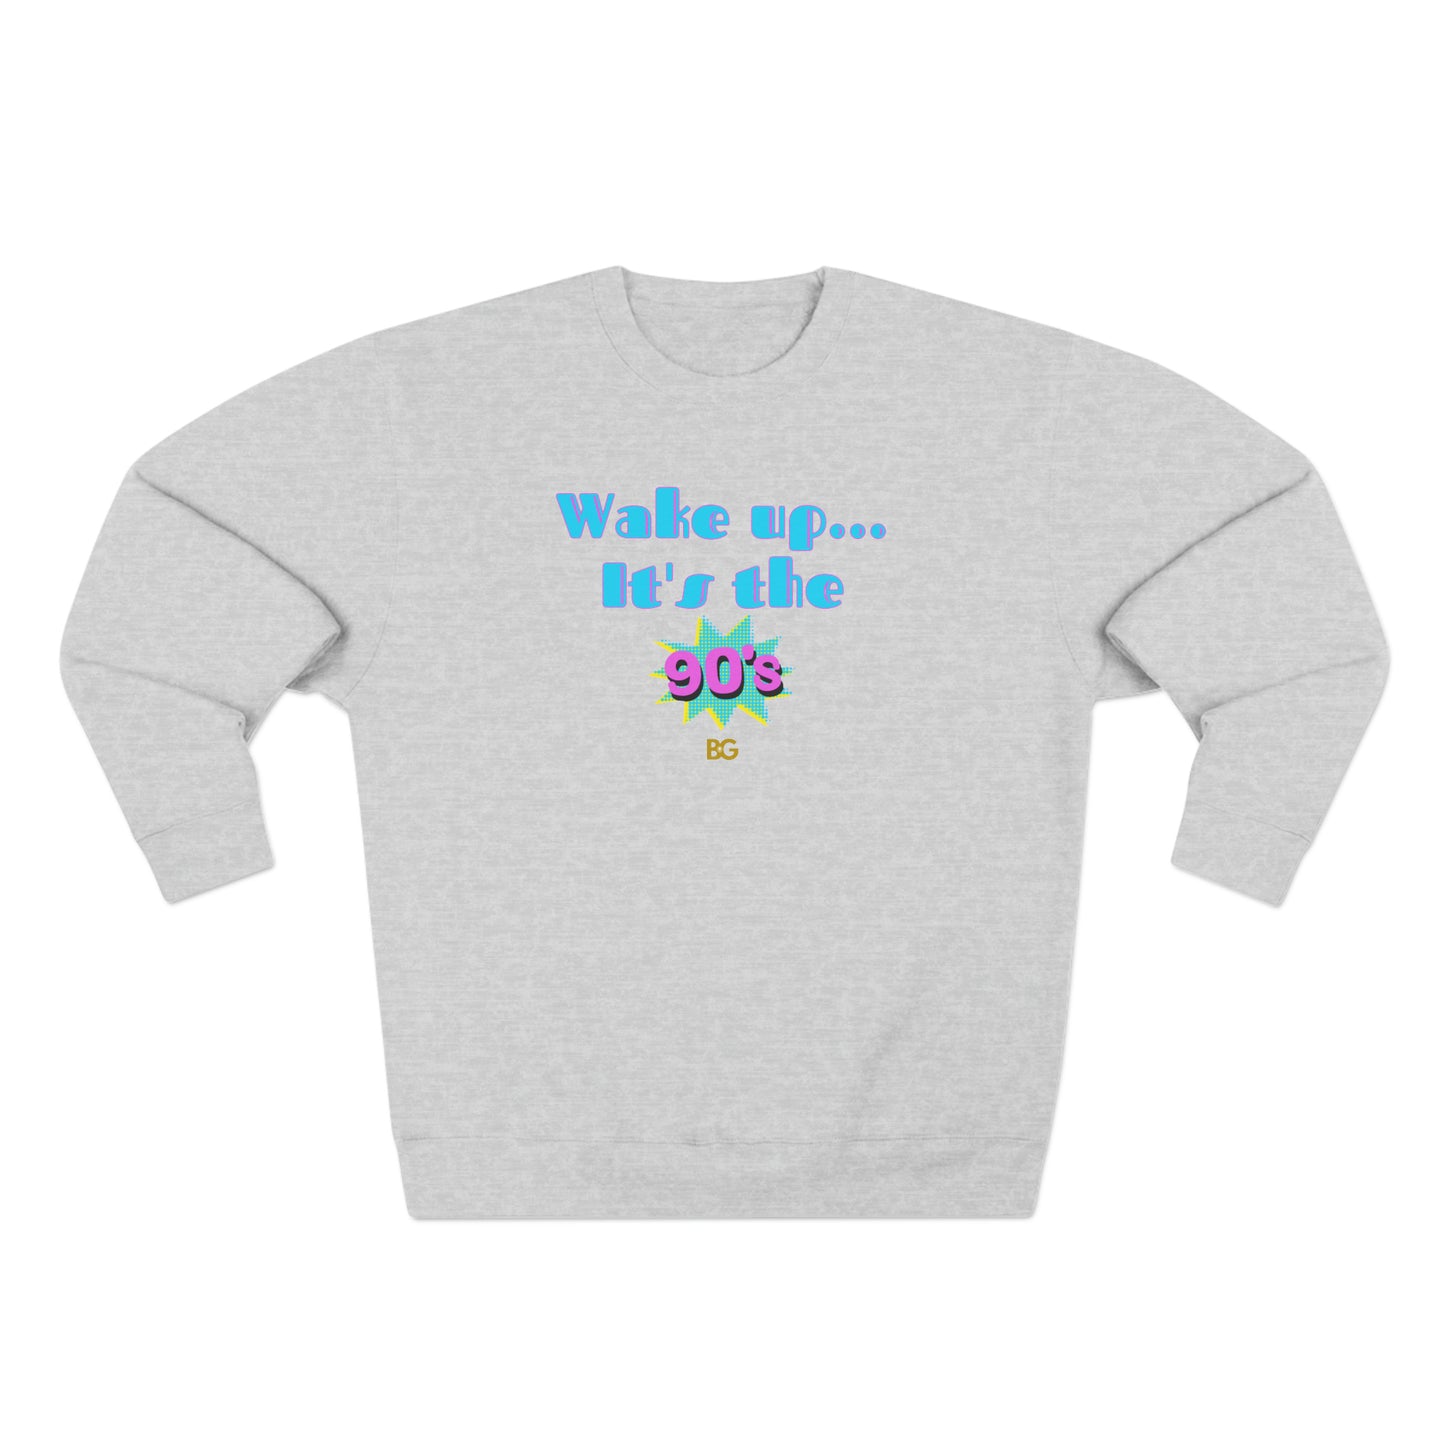 BG "Wake up... It's the 90's" Premium Crewneck Sweatshirt